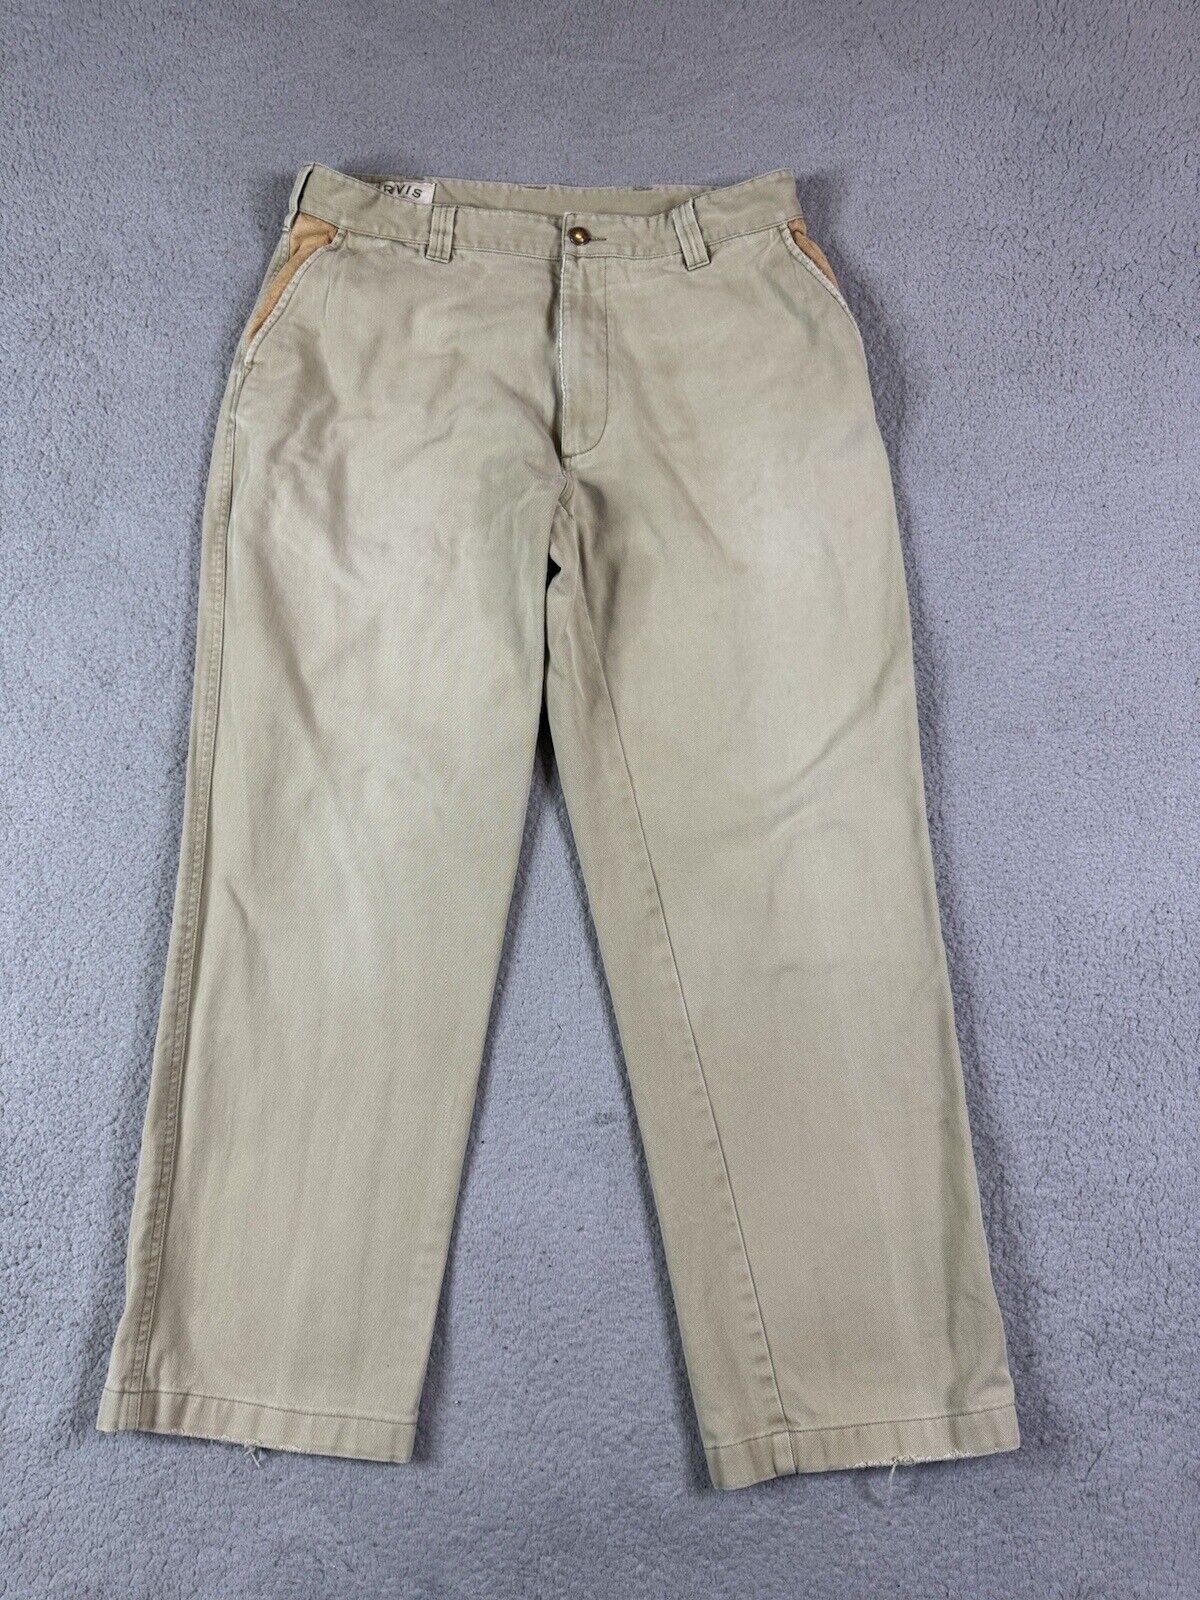 Vintage ORVIS Pants 36x30 Chino Khaki Suede Leather Trim Pockets Hunting Fishing